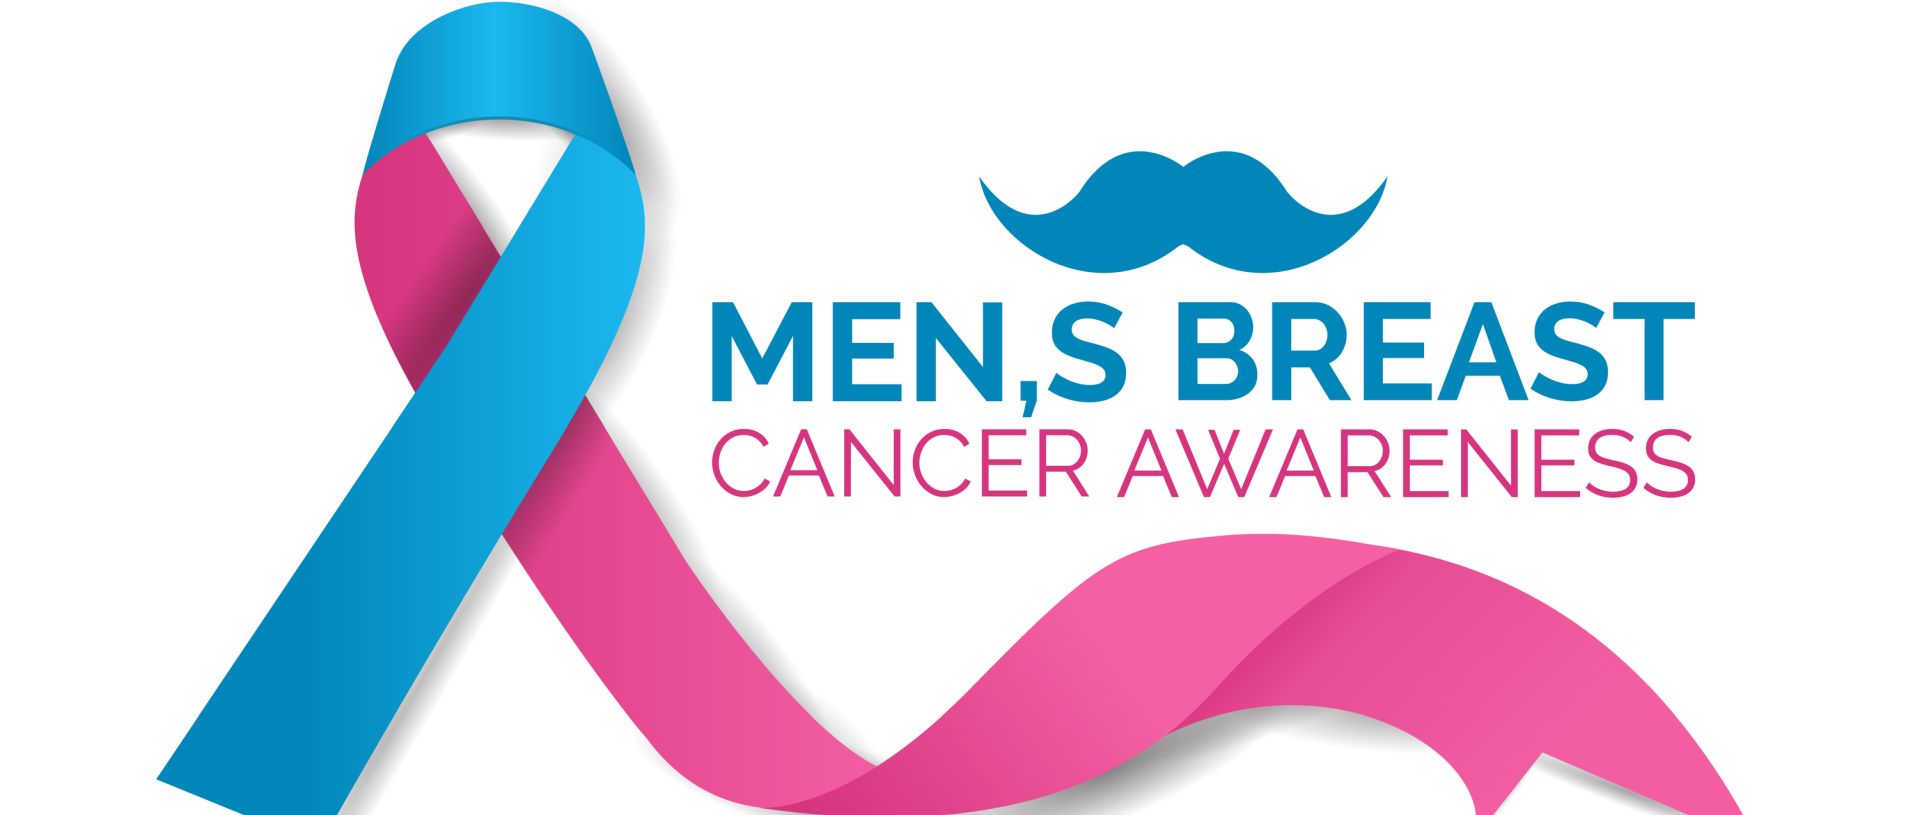 Men's breast cancer awareness.